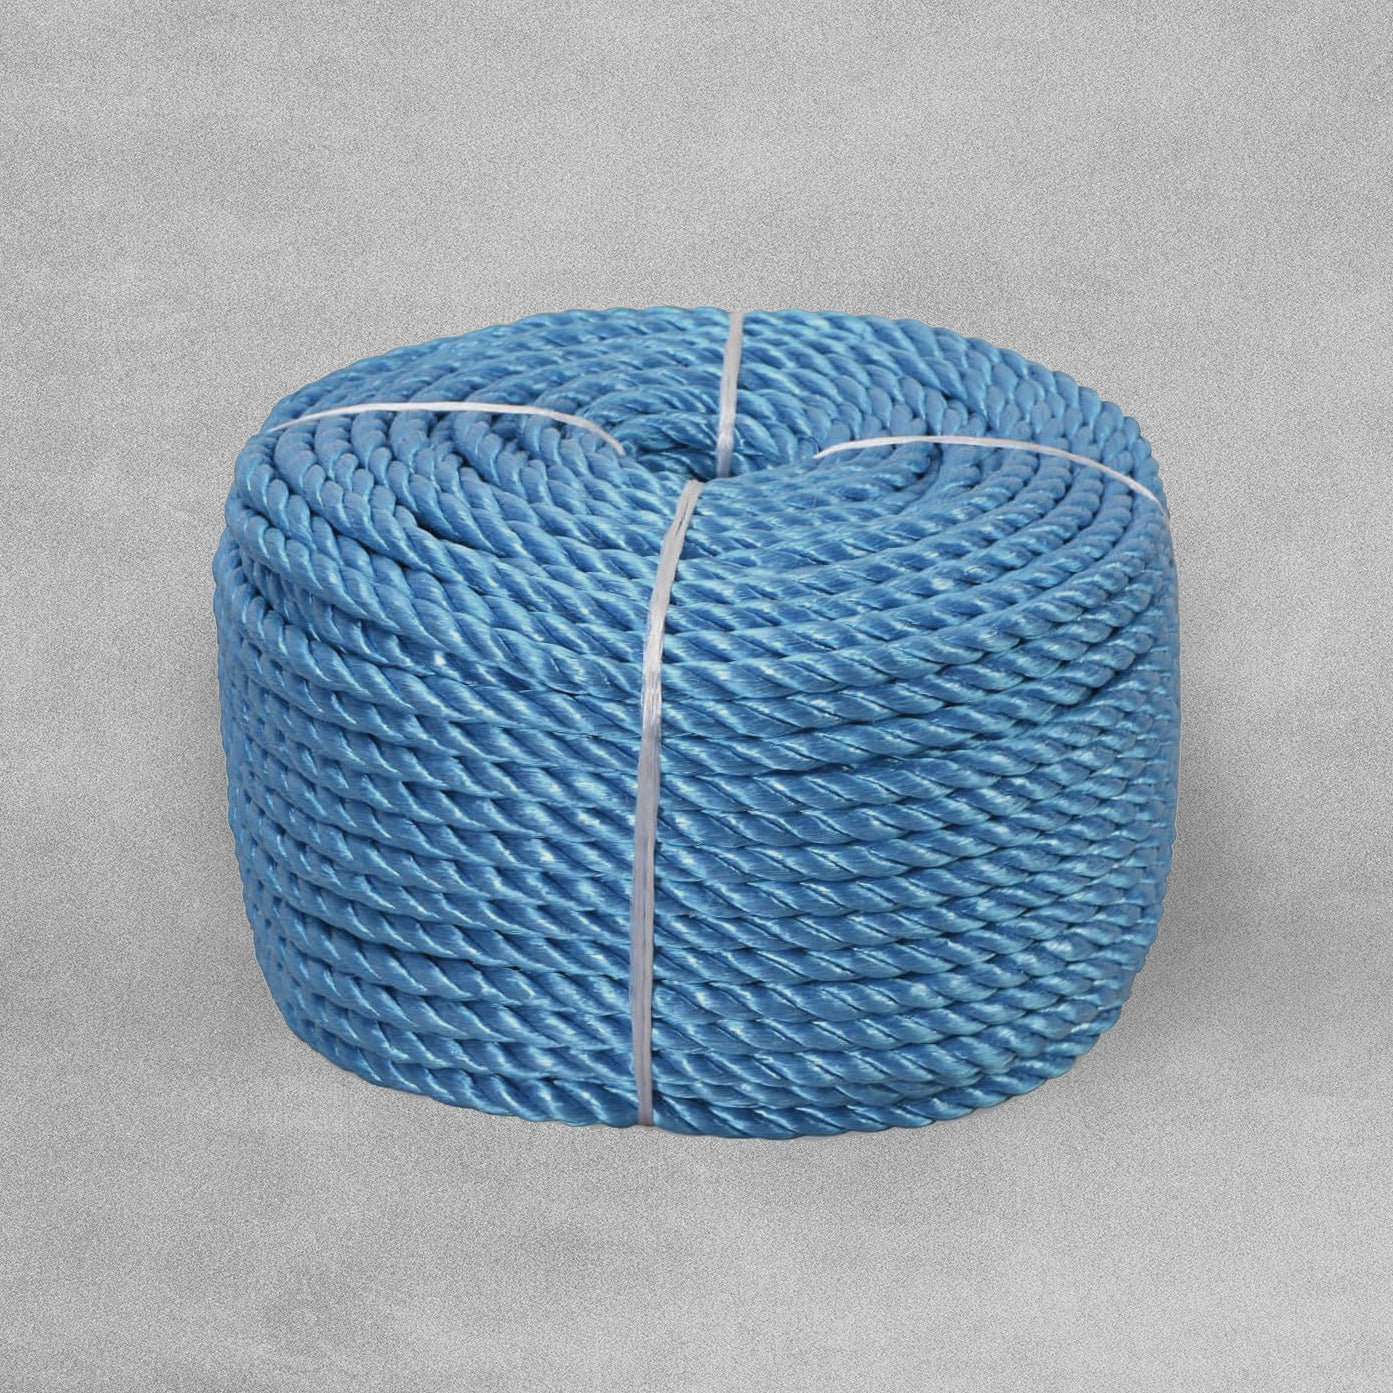 DIVCHI Polypropylene Blue Rope 6mm x 30m